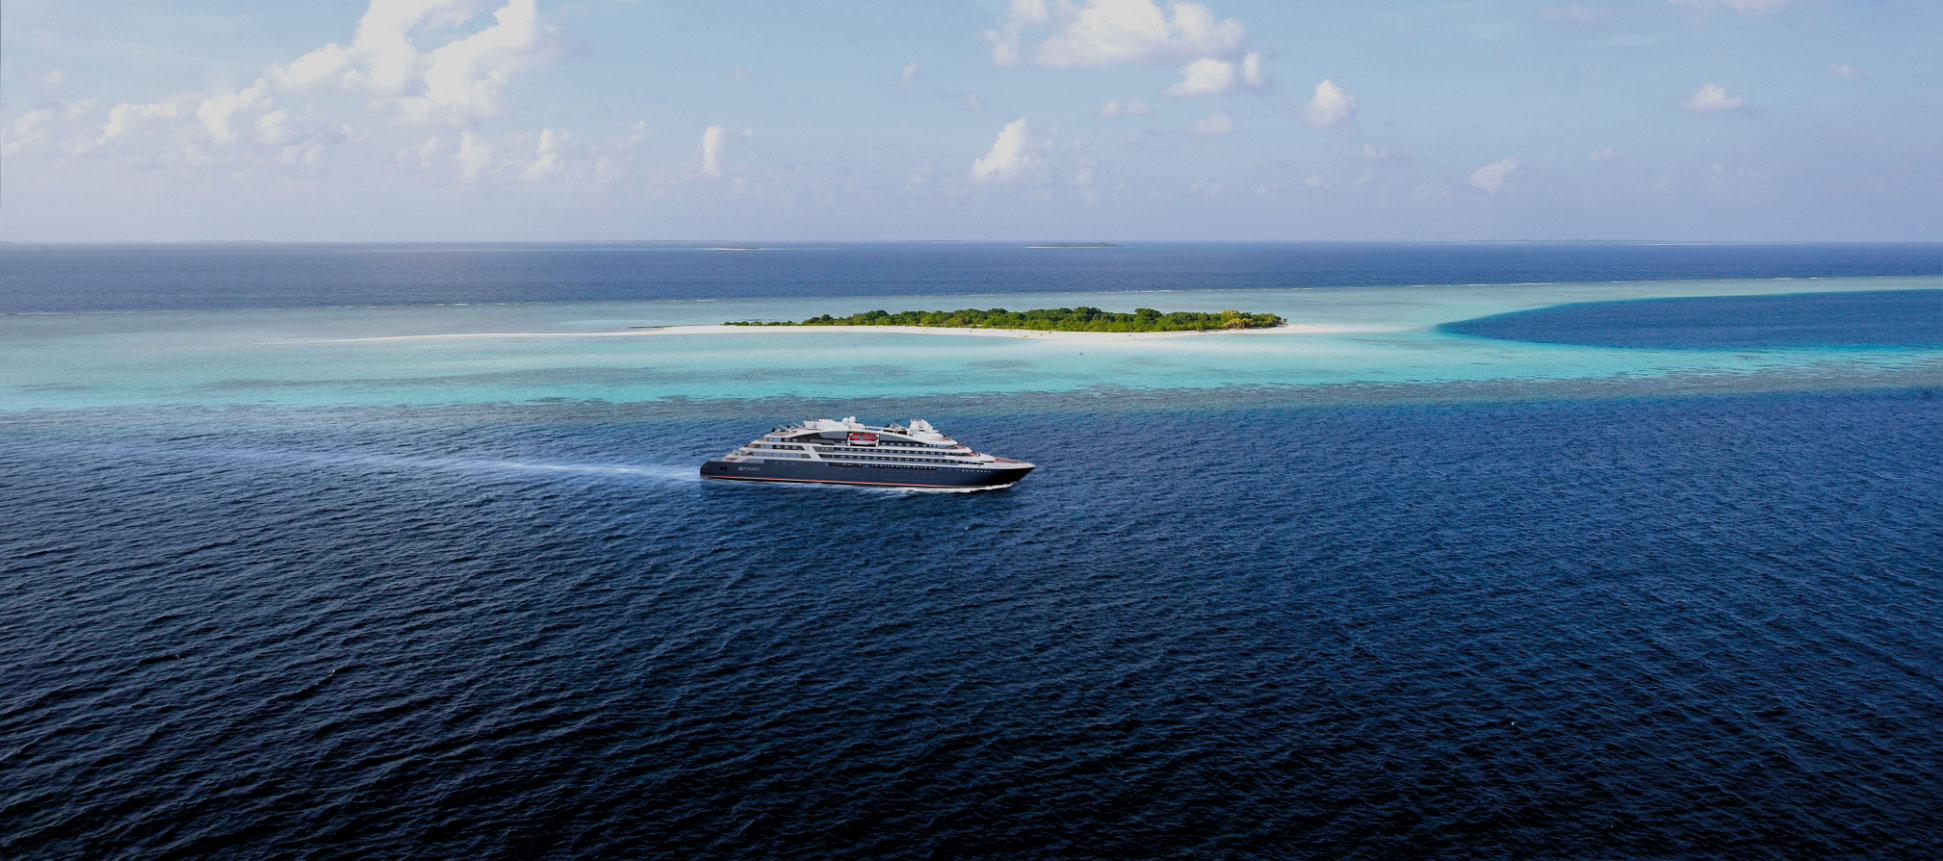 Luxury cruises - Luxury cruise lines and boats - Ponant | Ponant